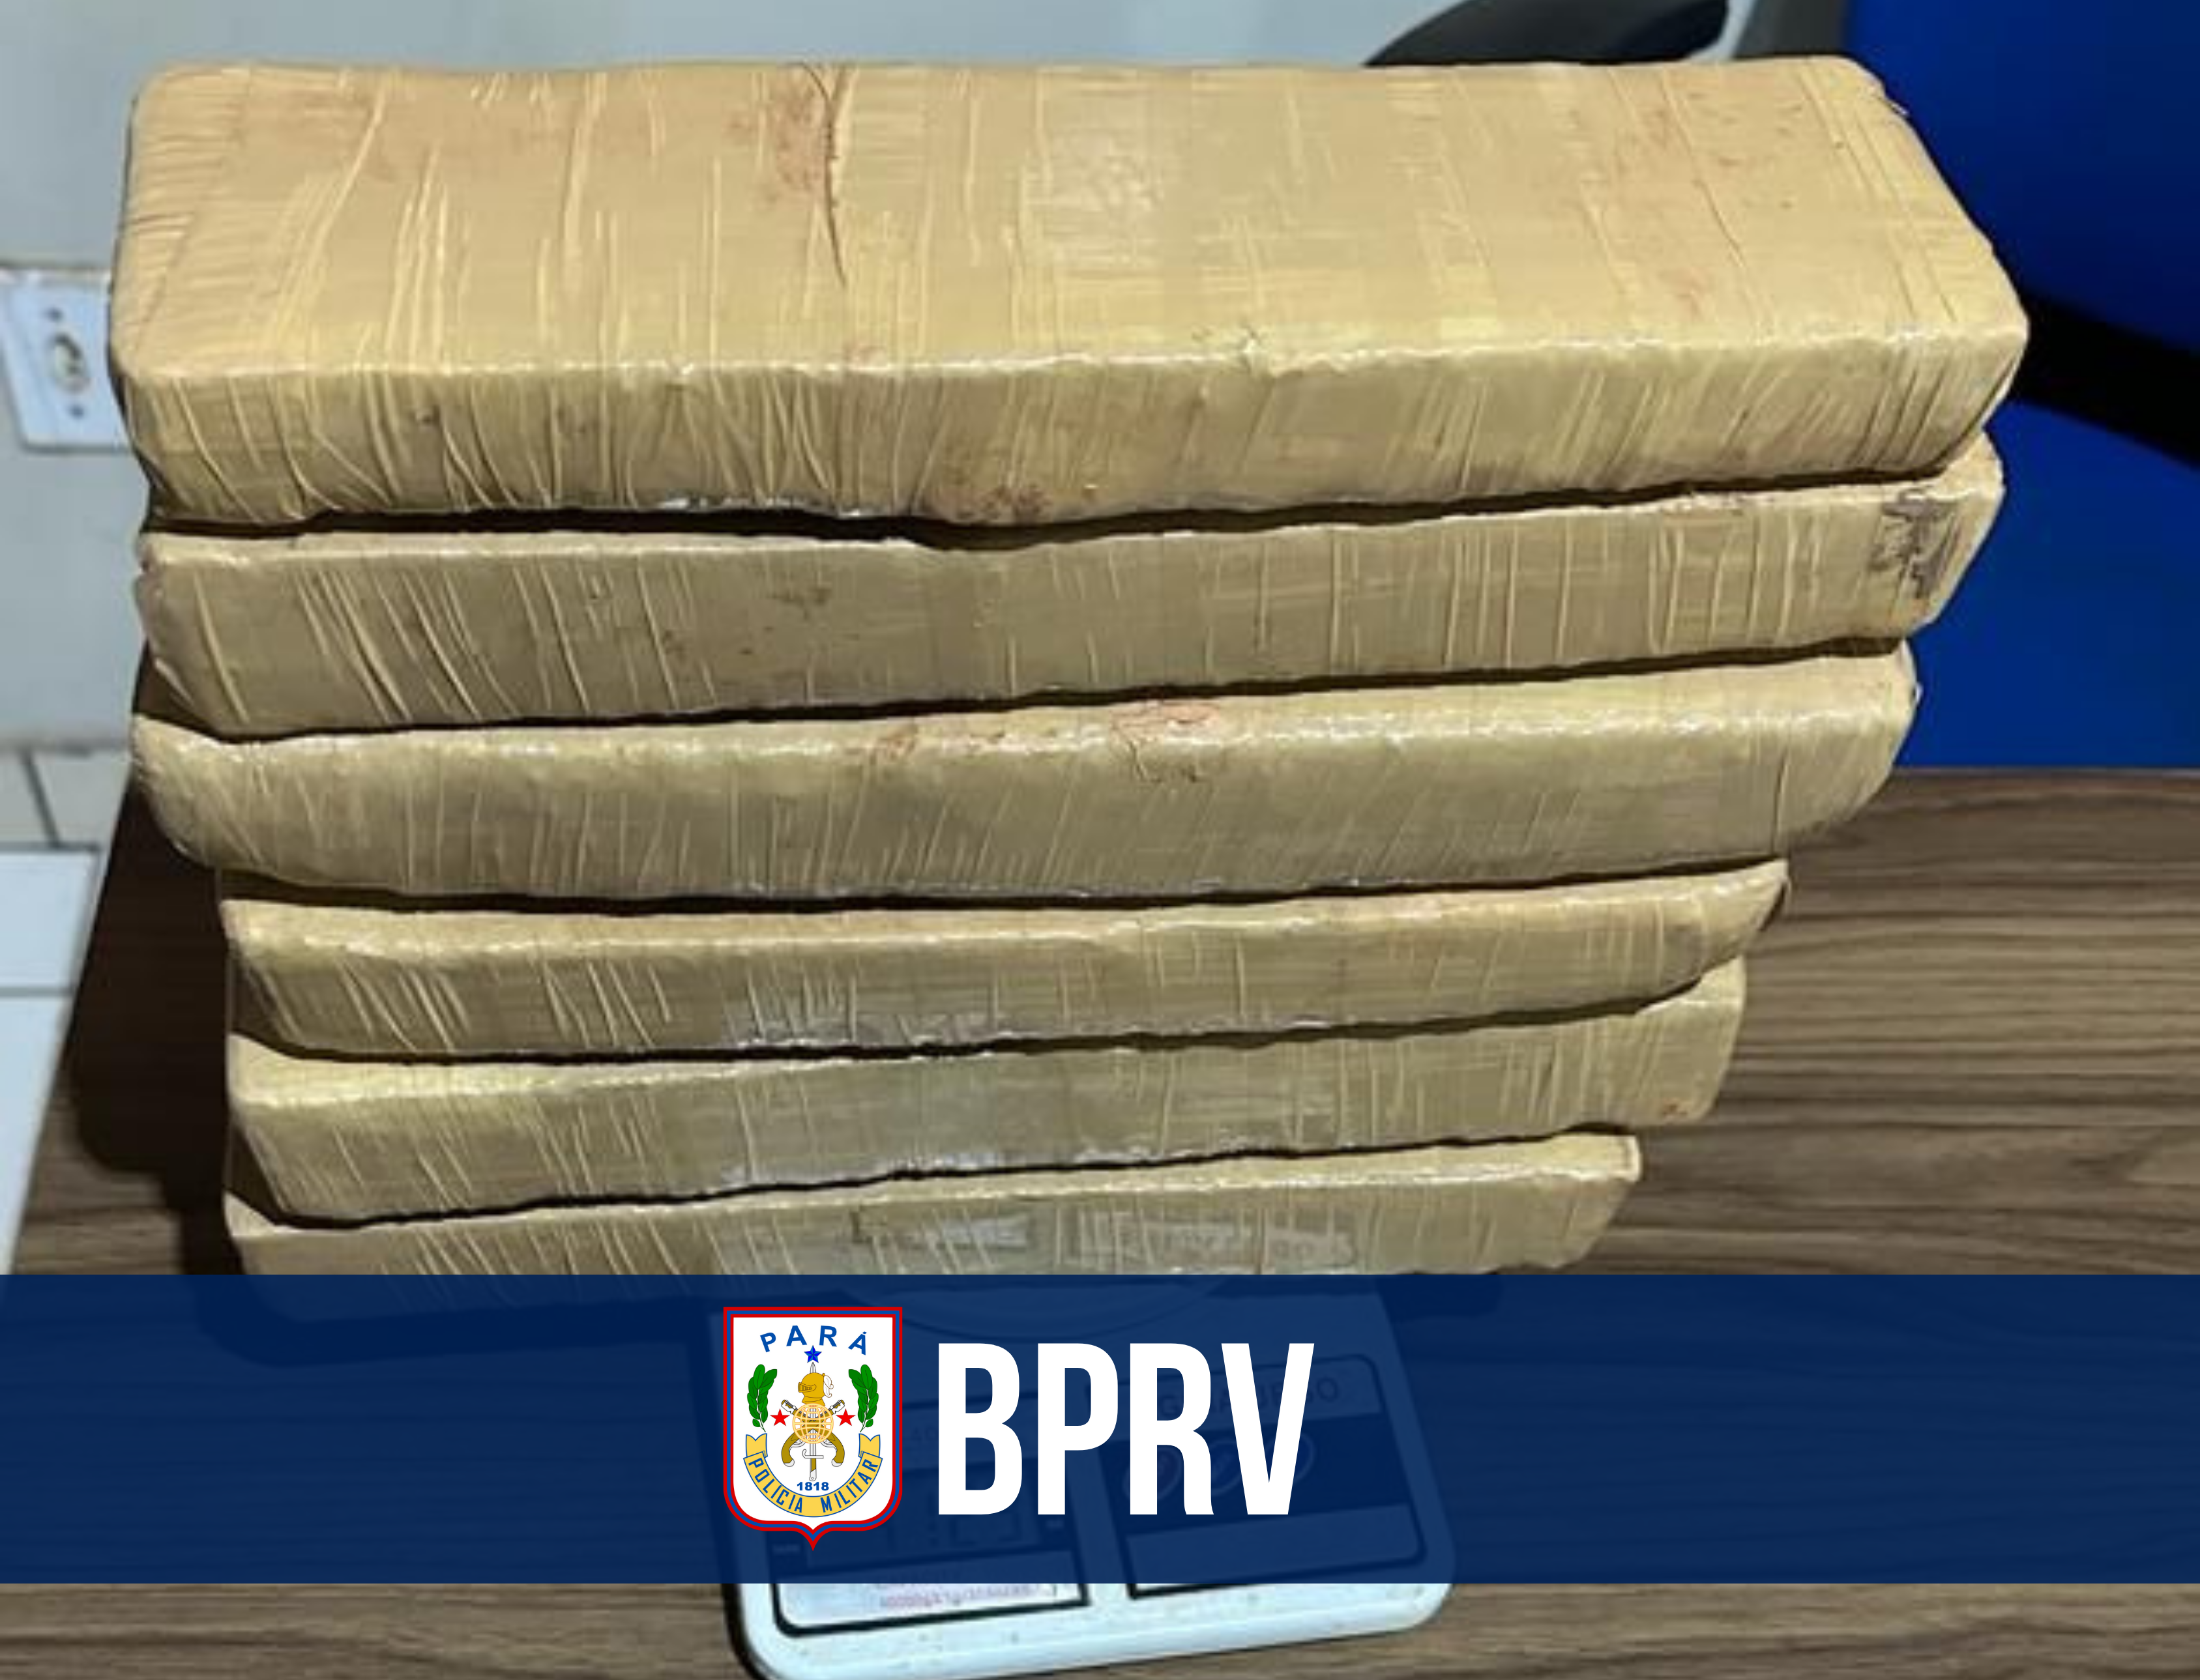 BPRV prende suspeito e apreende 4kg de drogas